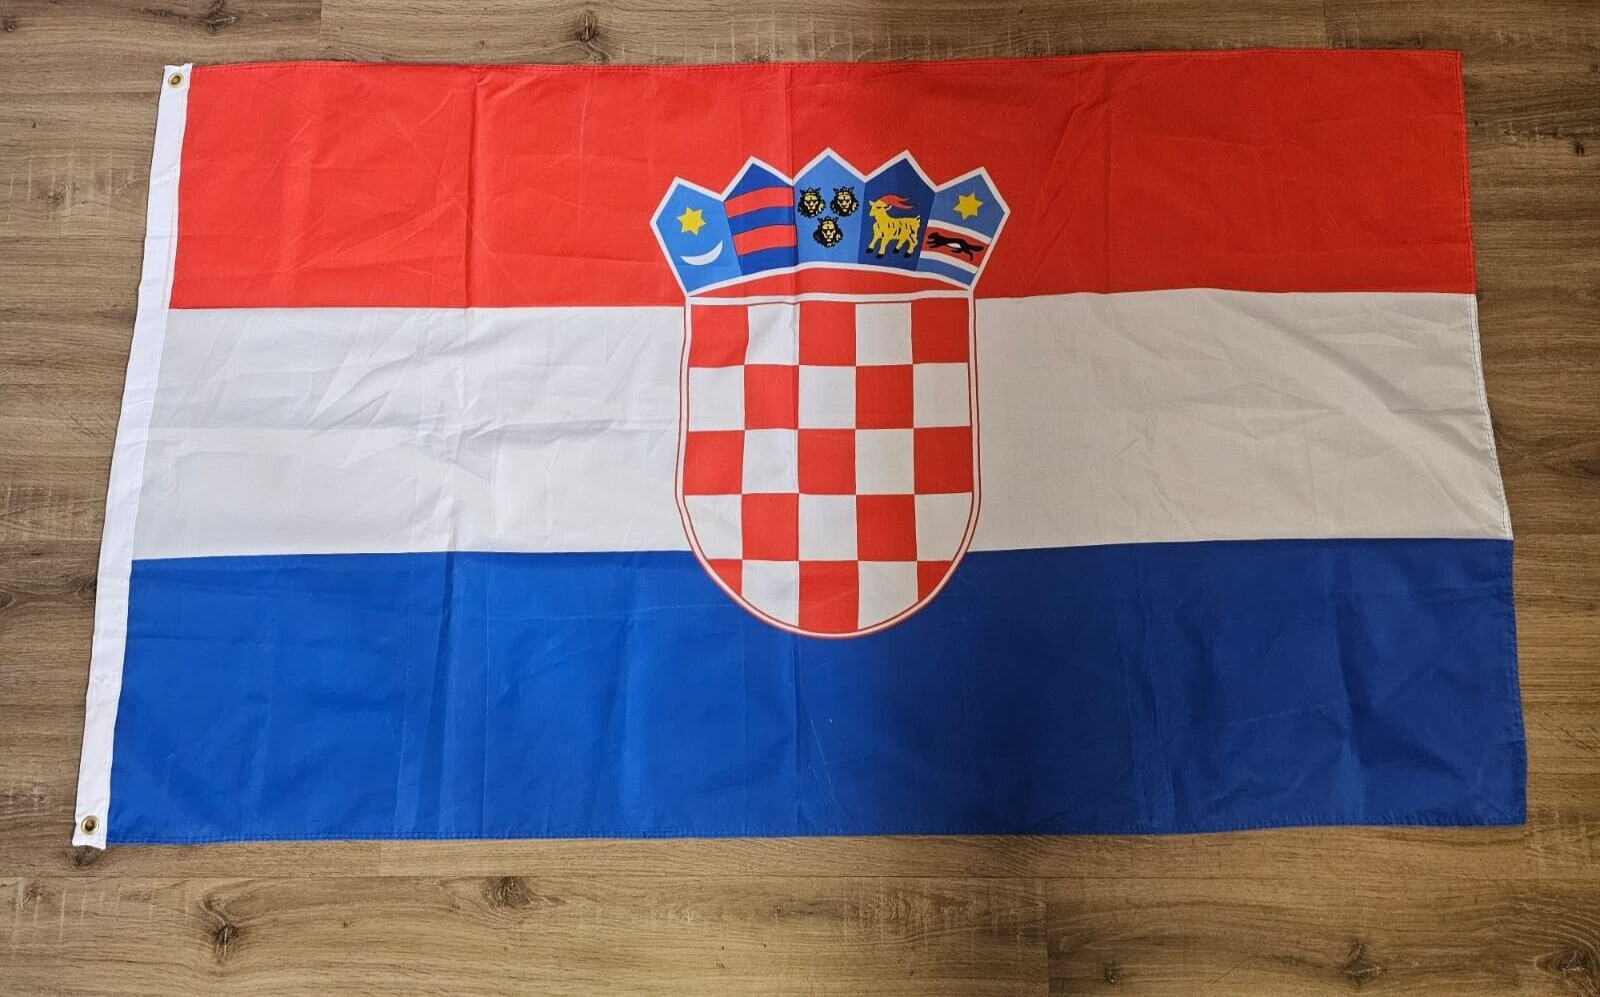 Croatia National flag 5x3ft 150cmx90cm In Very Good Condition